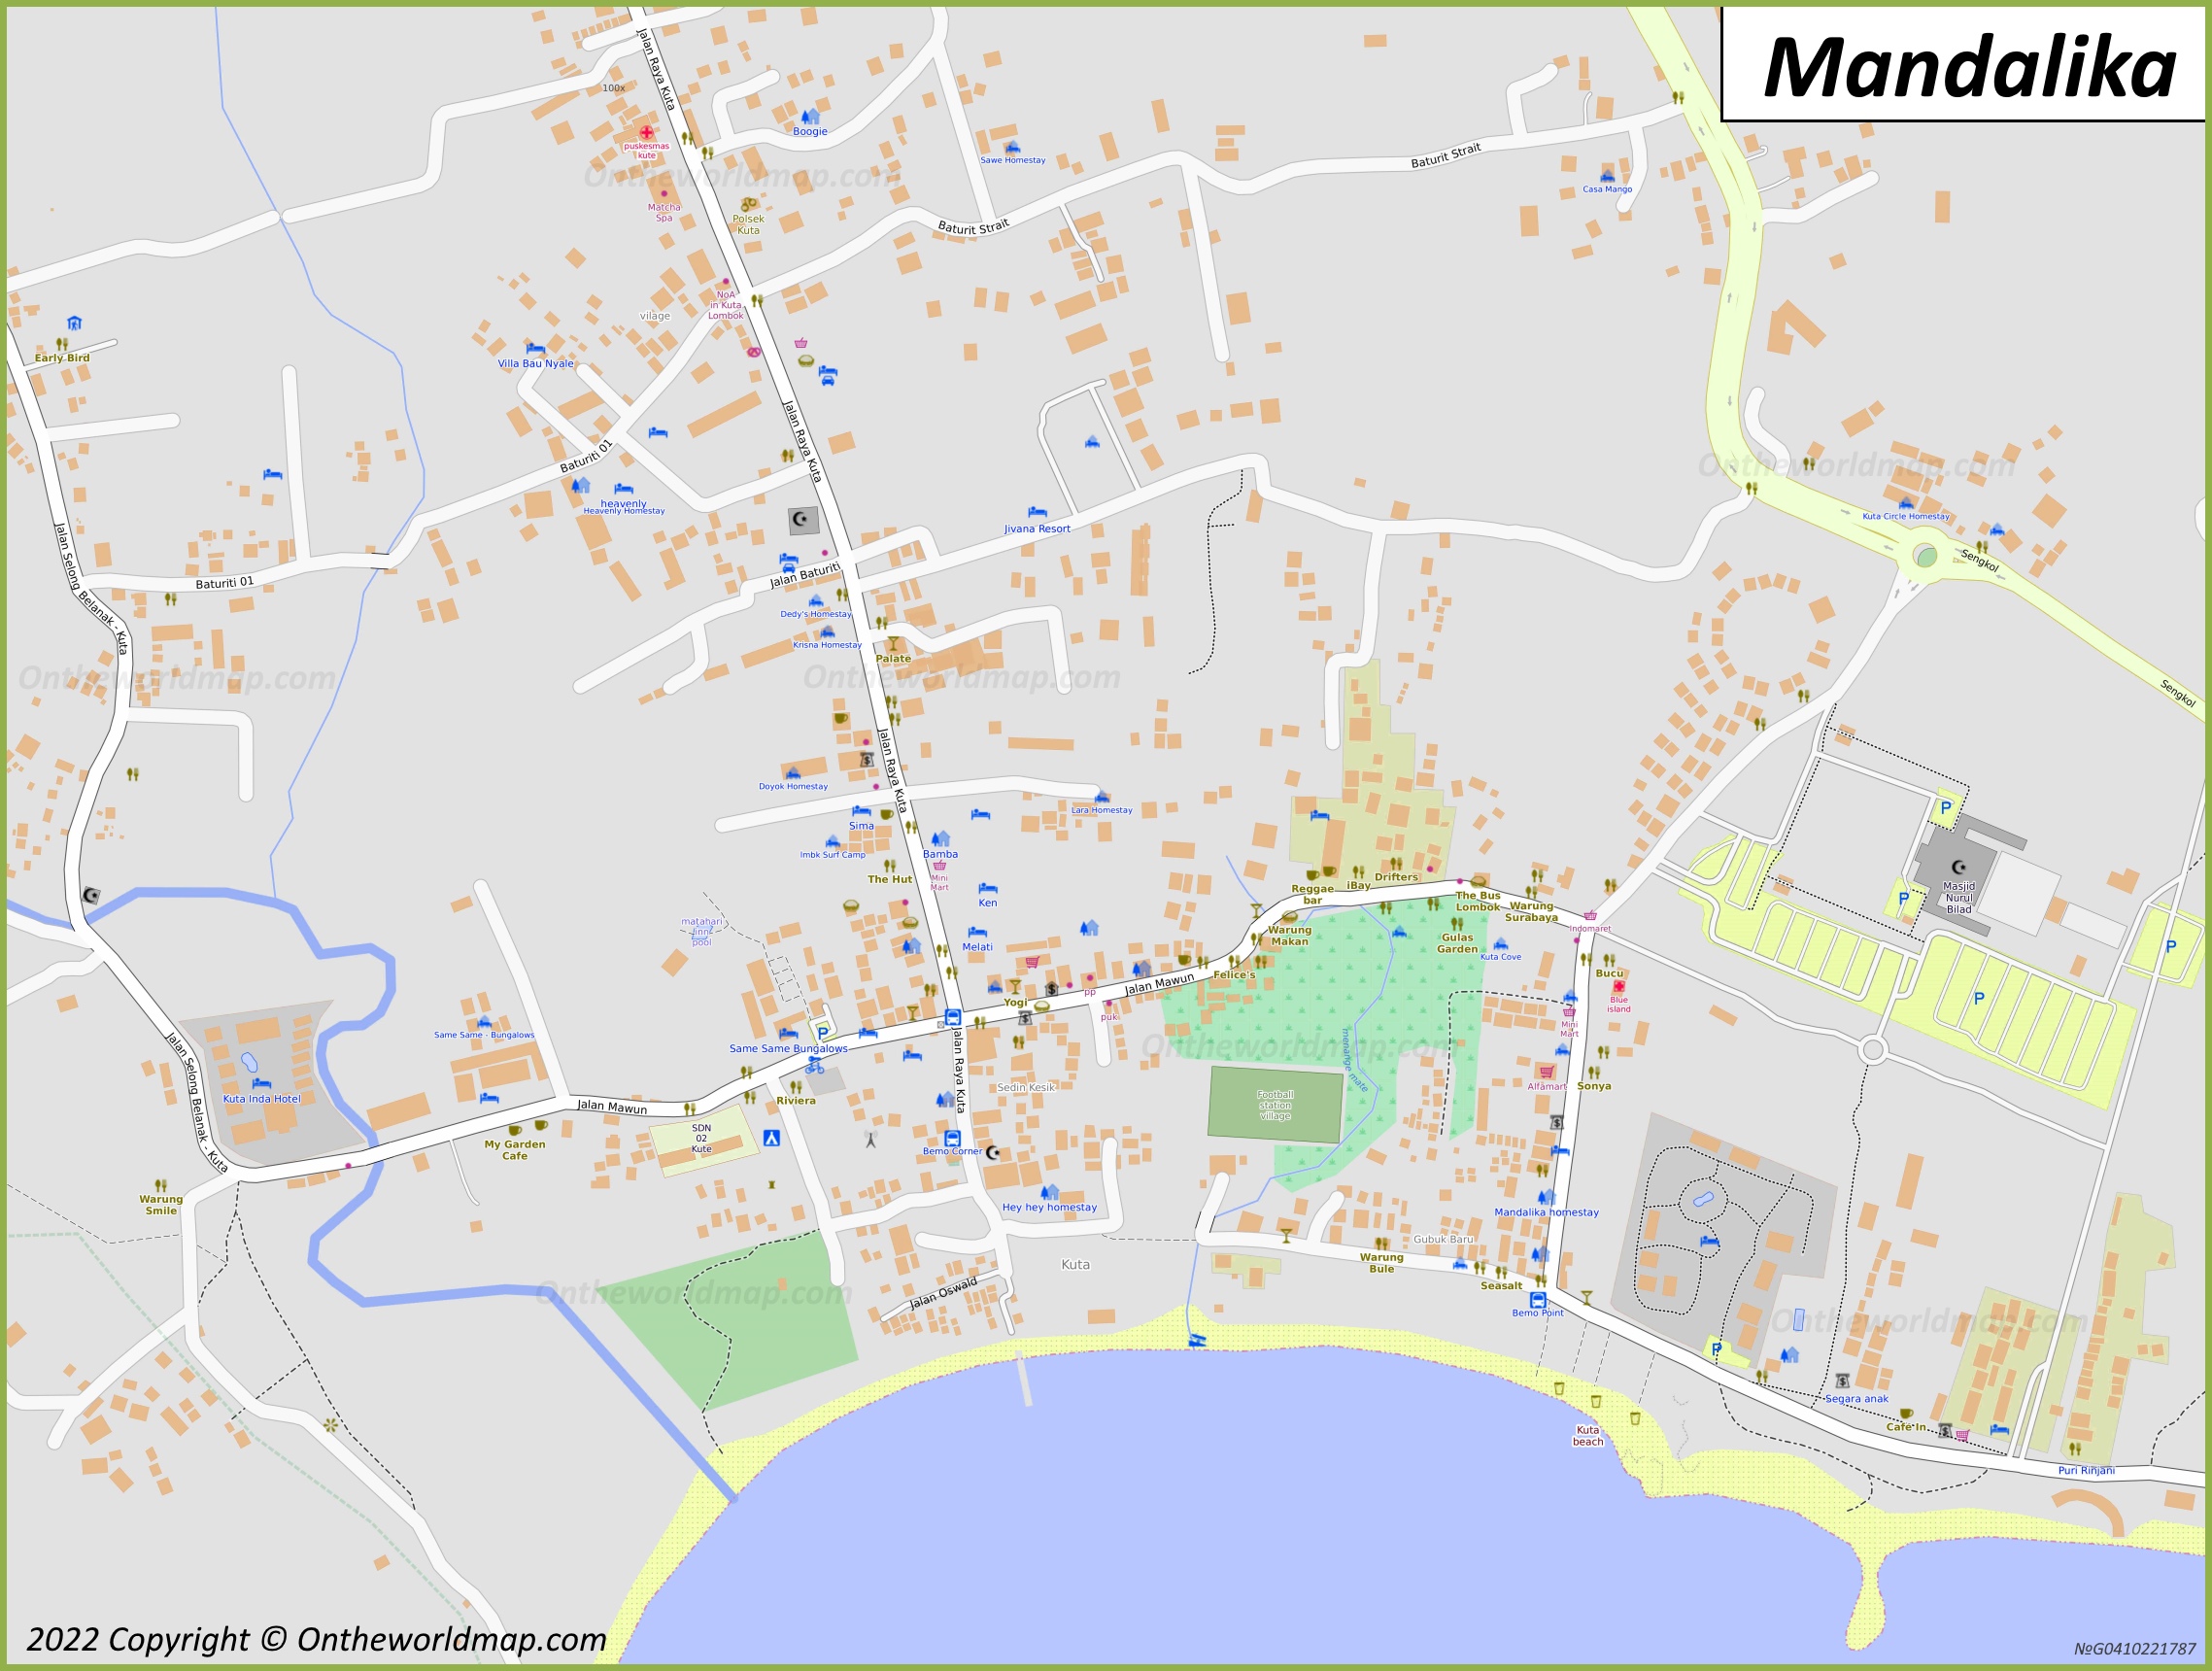 Mandalika Town Centre Map